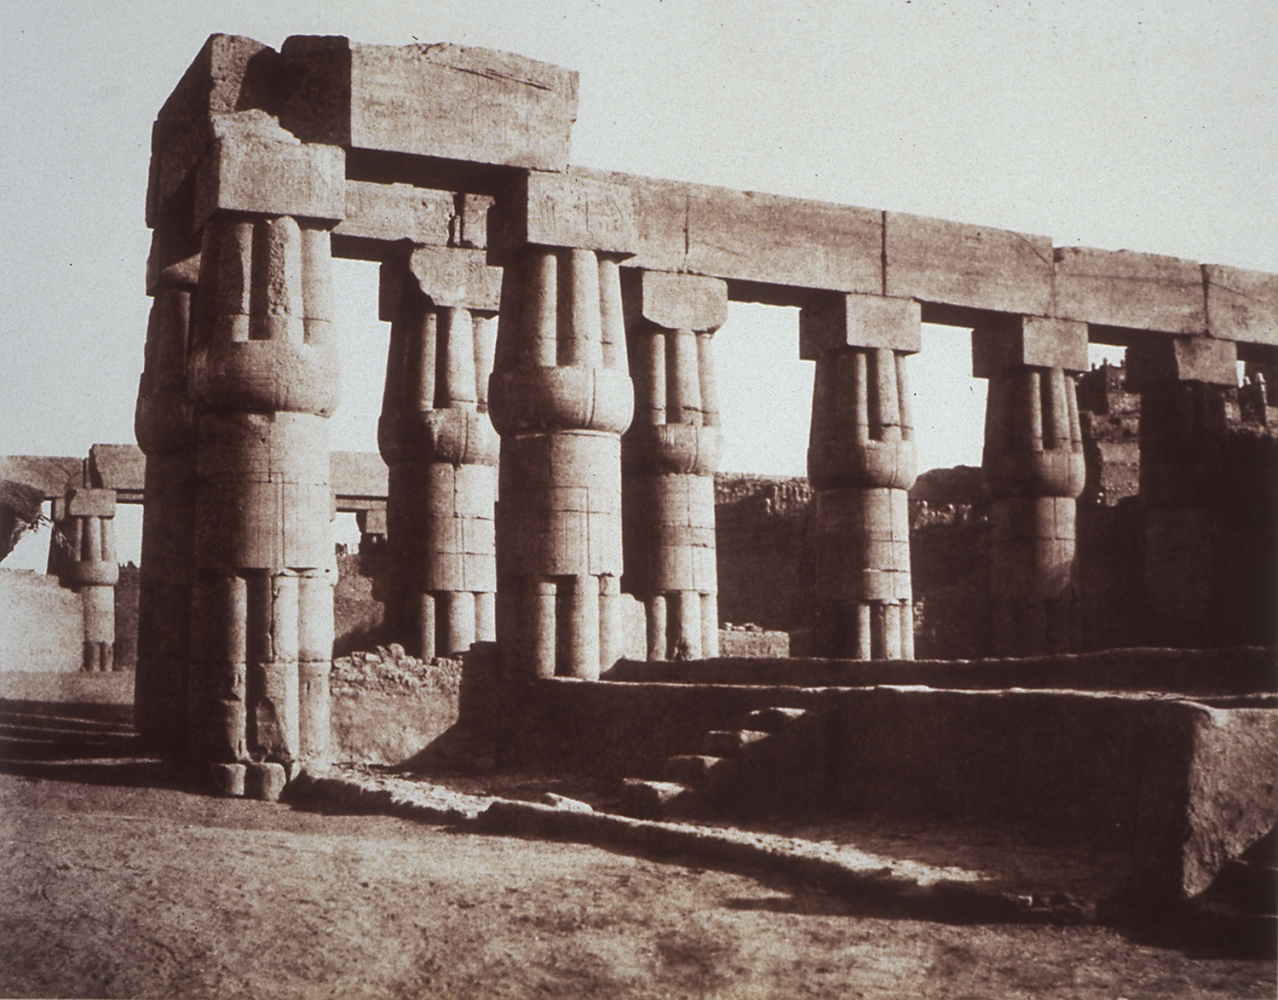 Félix TEYNARD (French, 1817-1892) "Égypte, Louksor (Thèbes). Construction Postérieure, Galeries Parallèles. Pl. 32", 1851-1852 Salt print, 1853-1854, from a waxed paper negative 24.0 x 30.4 cm